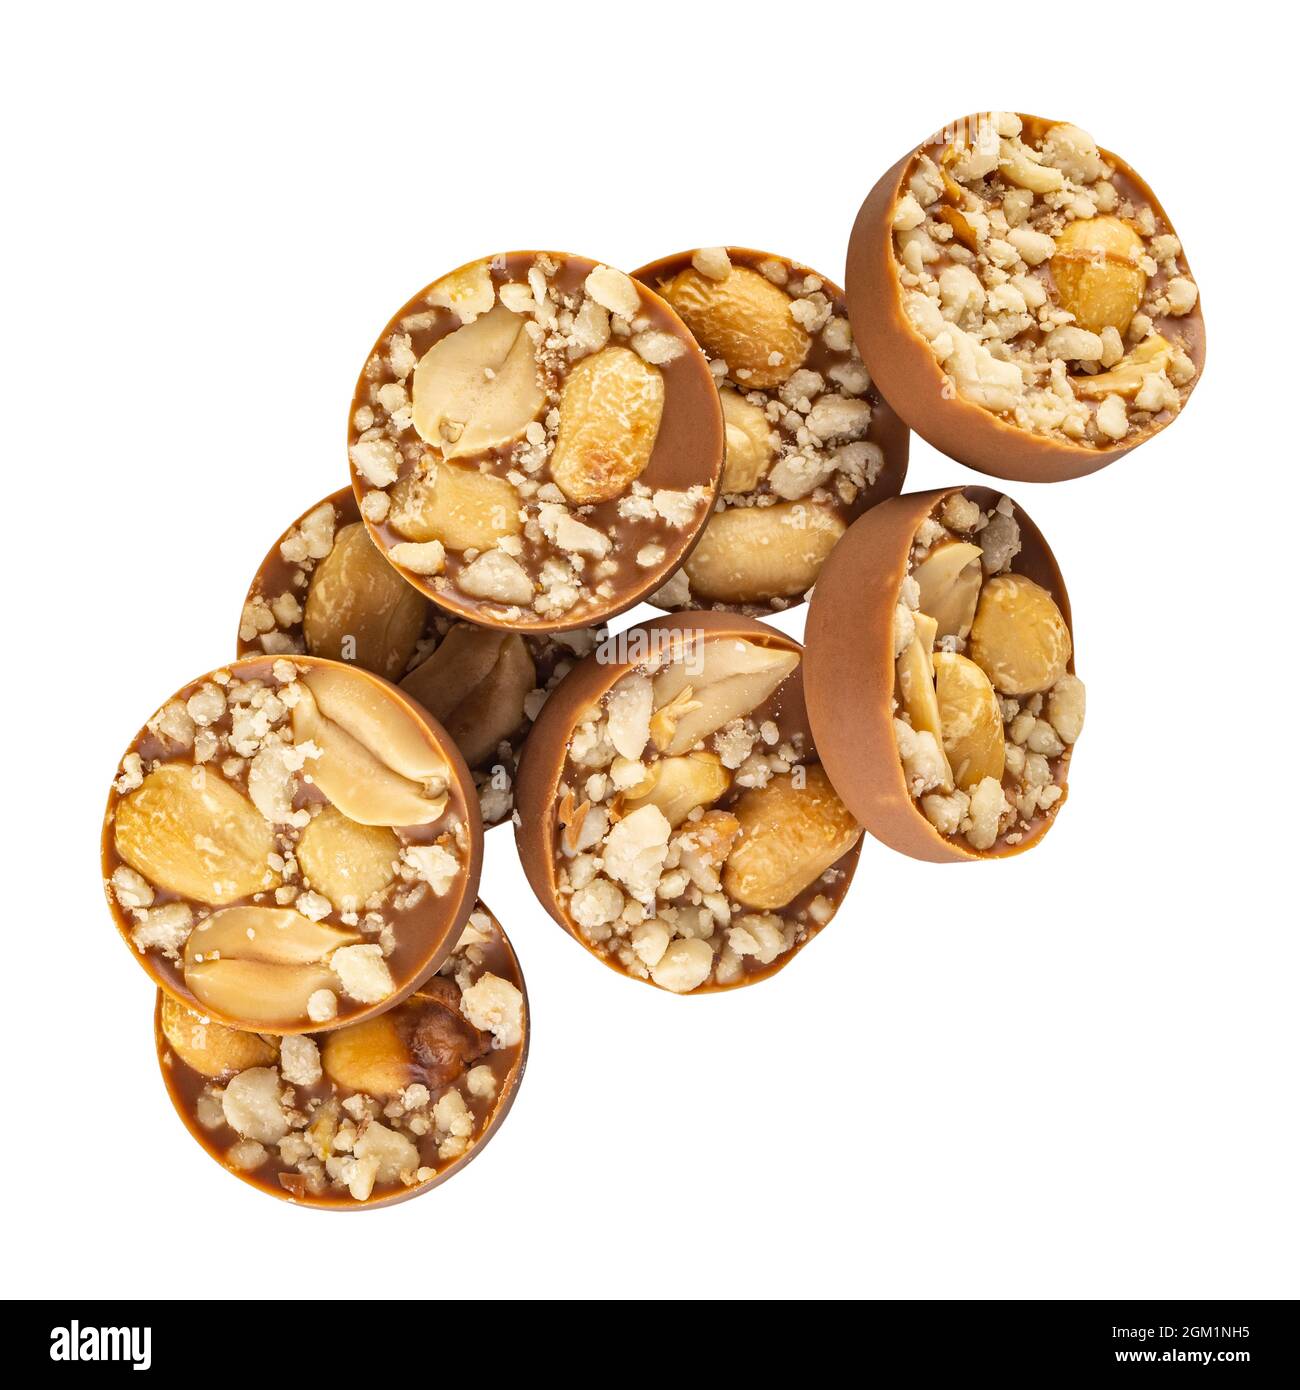 Milk chocolate praline with hazelnut crumb topping on white background Stock Photo